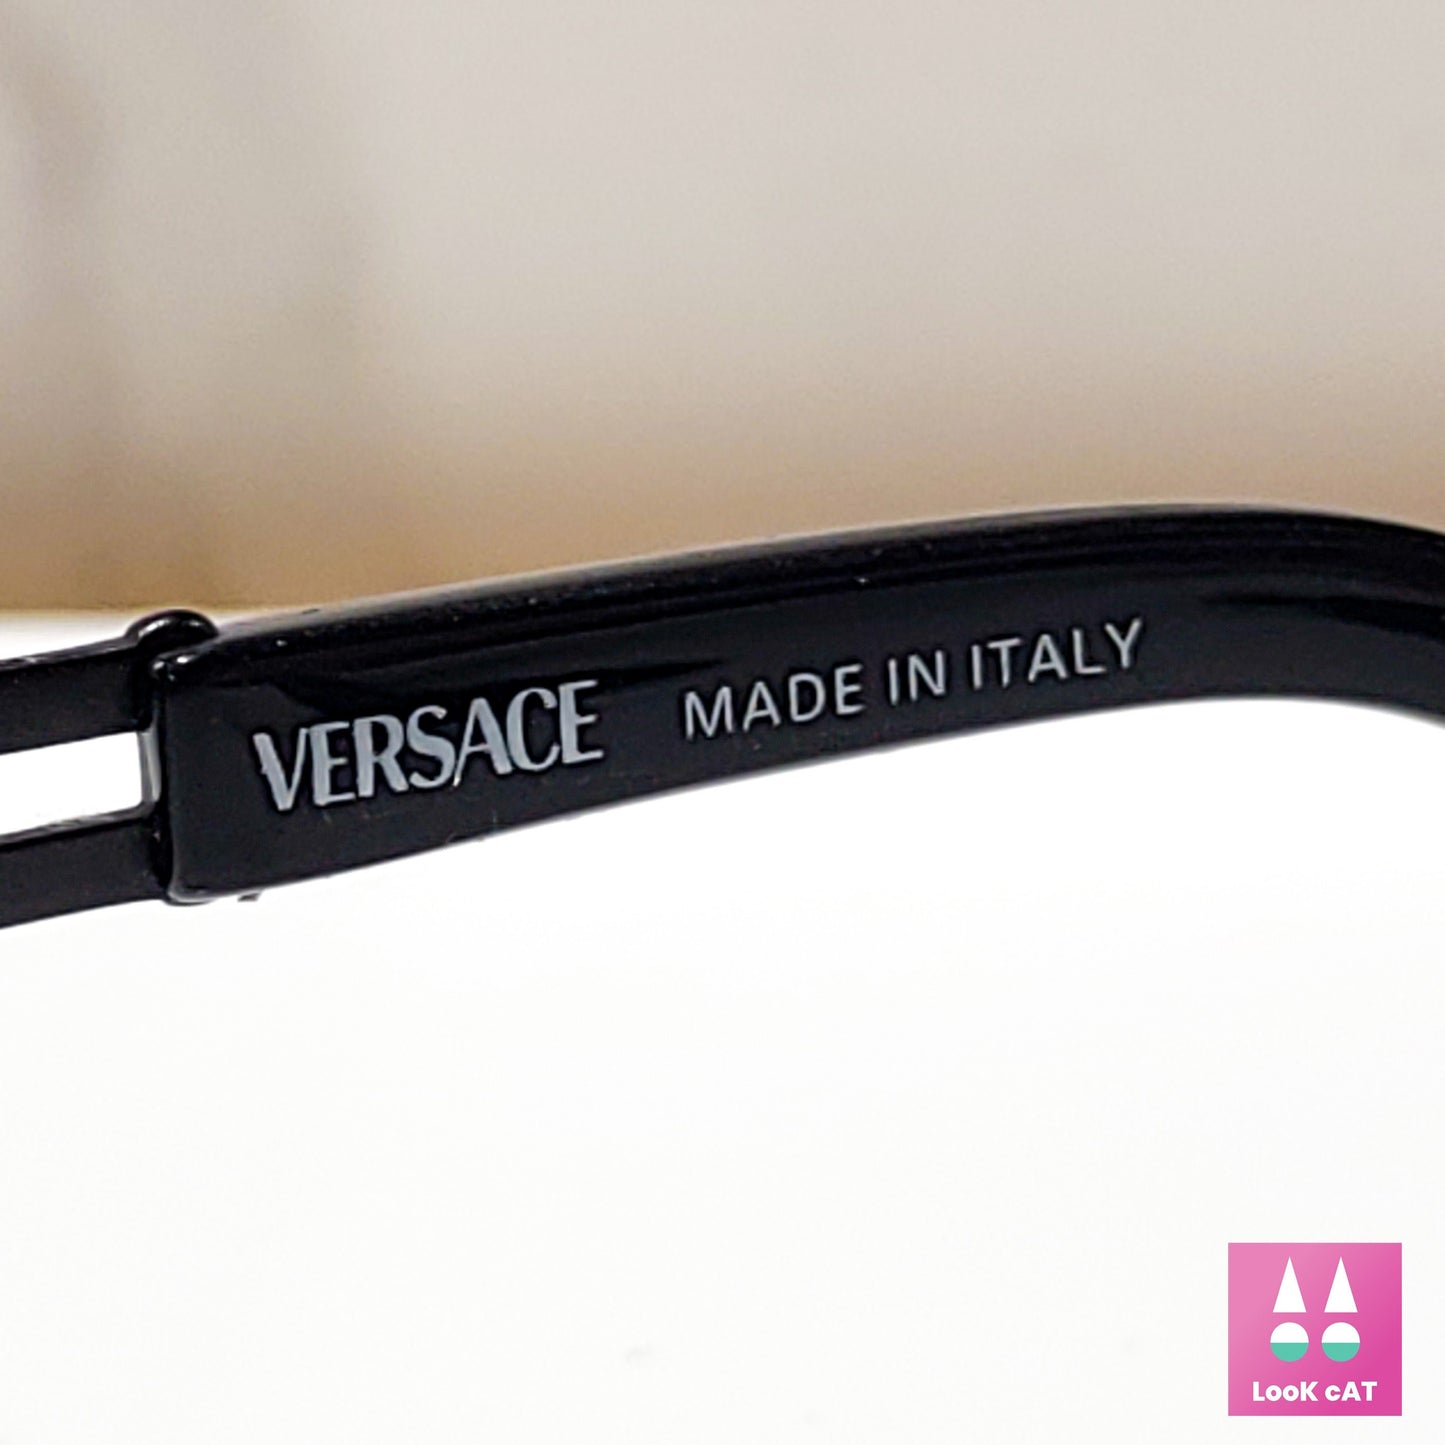 Occhiali da sole vintage Gianni Versace mod S 40 lunetta brille